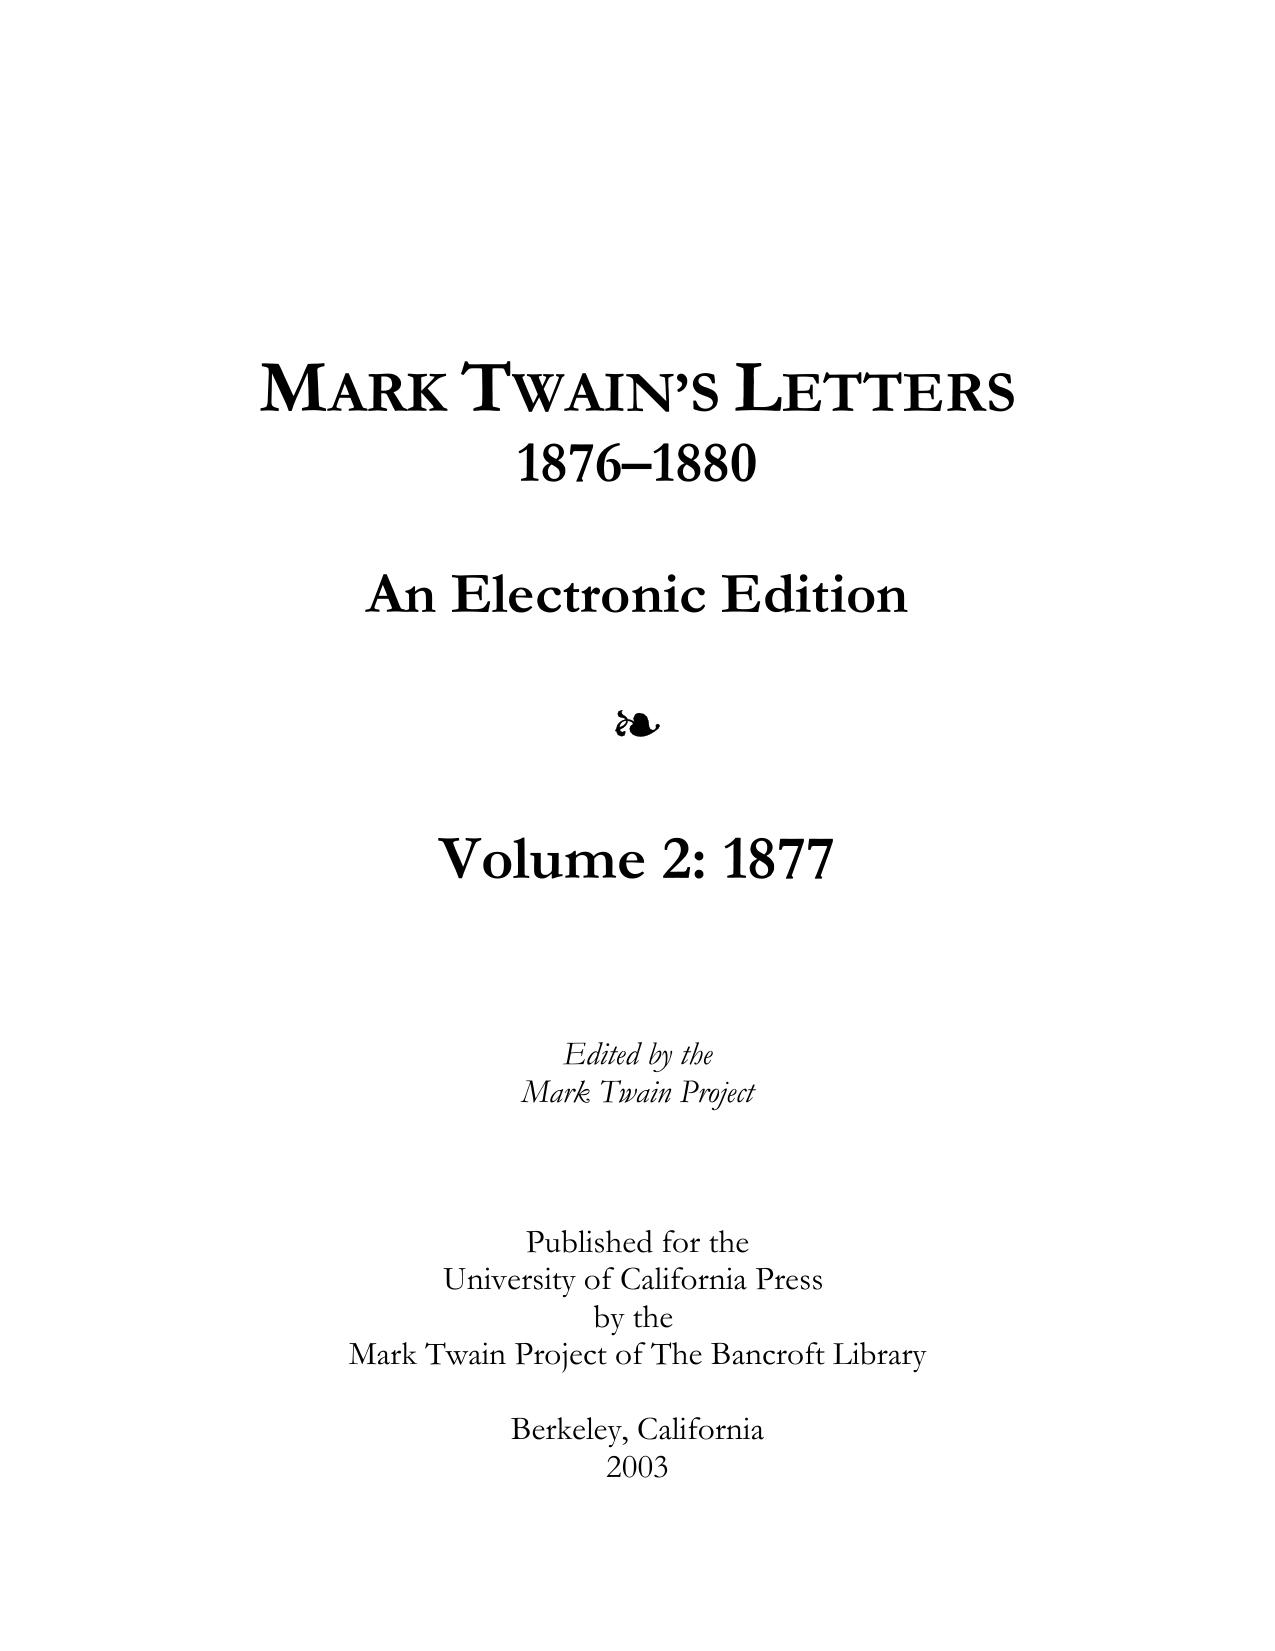 Mark Twain's Letters, 1876-1880, An Electronic Edition, Volume 2: 1877, © 2001 The Mark Twain Foundation